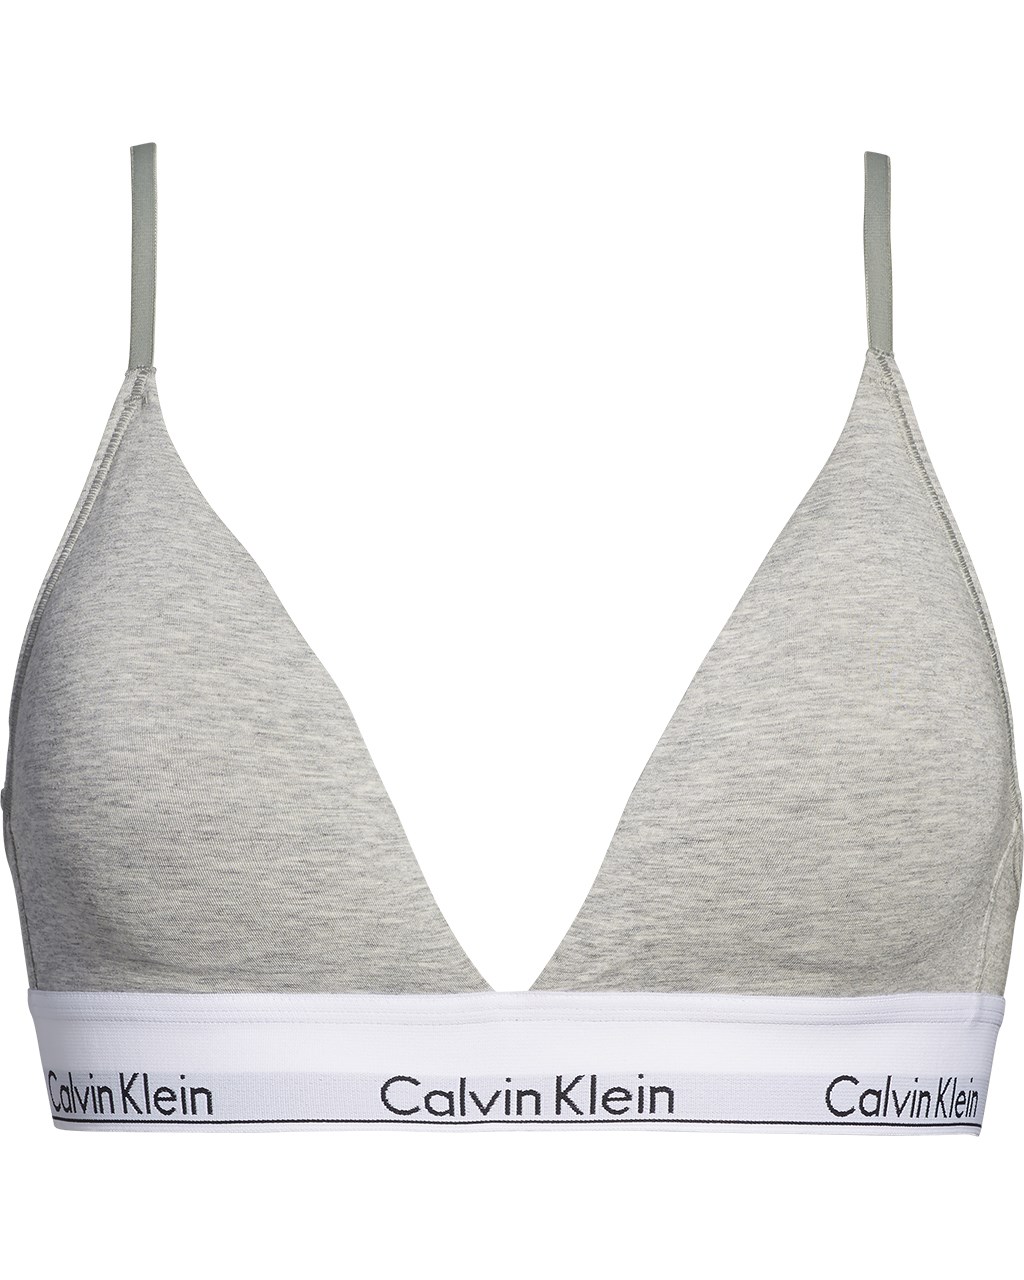 Calvin Klein Triangle bra, Women's Fashion, New Undergarments